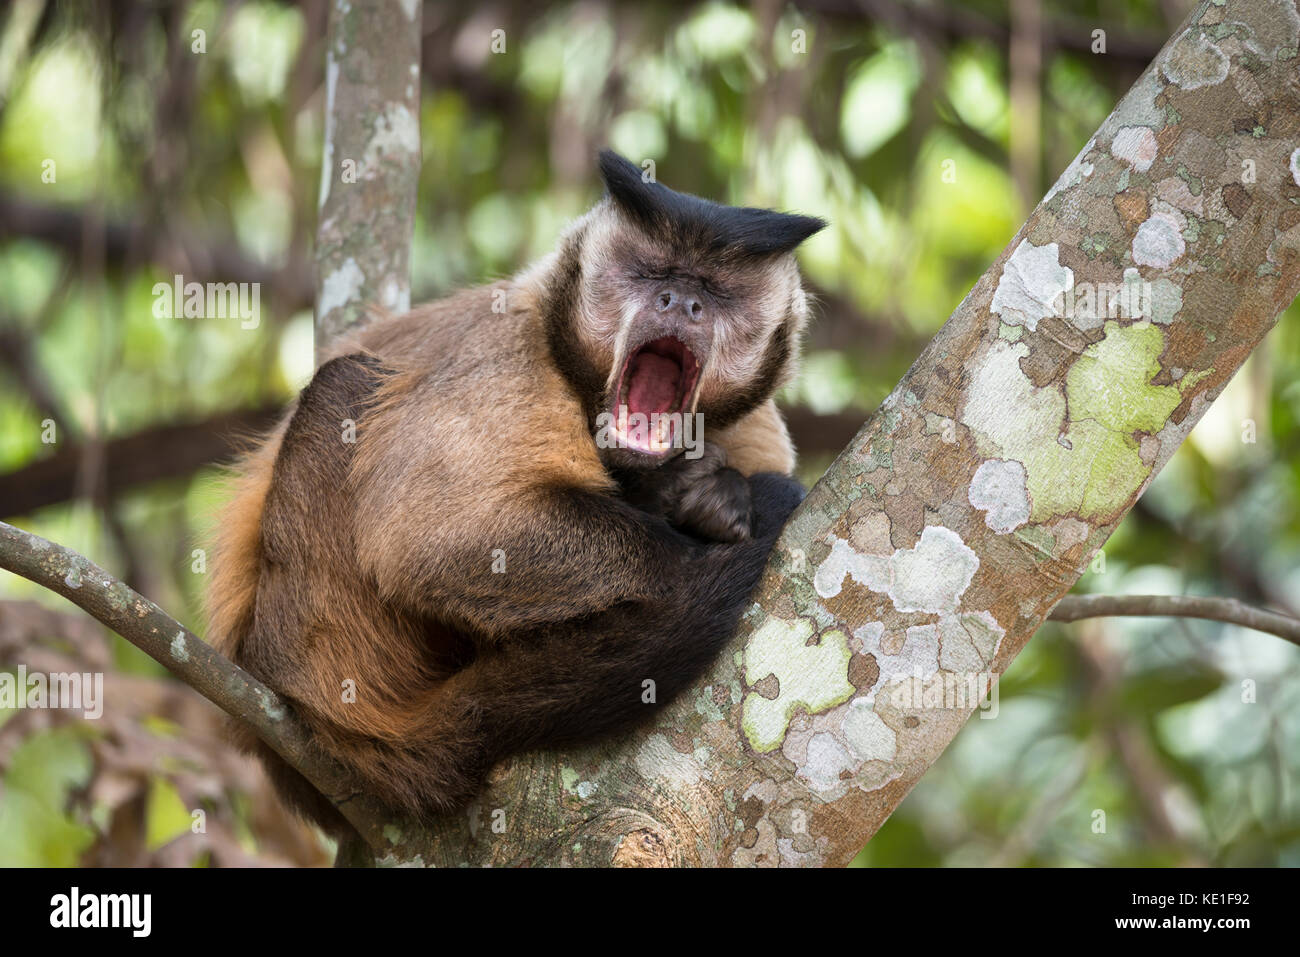 Black-striped Capuchin Monkey (Sapajus libidinosus) from the Pantanal of Brazil Stock Photo